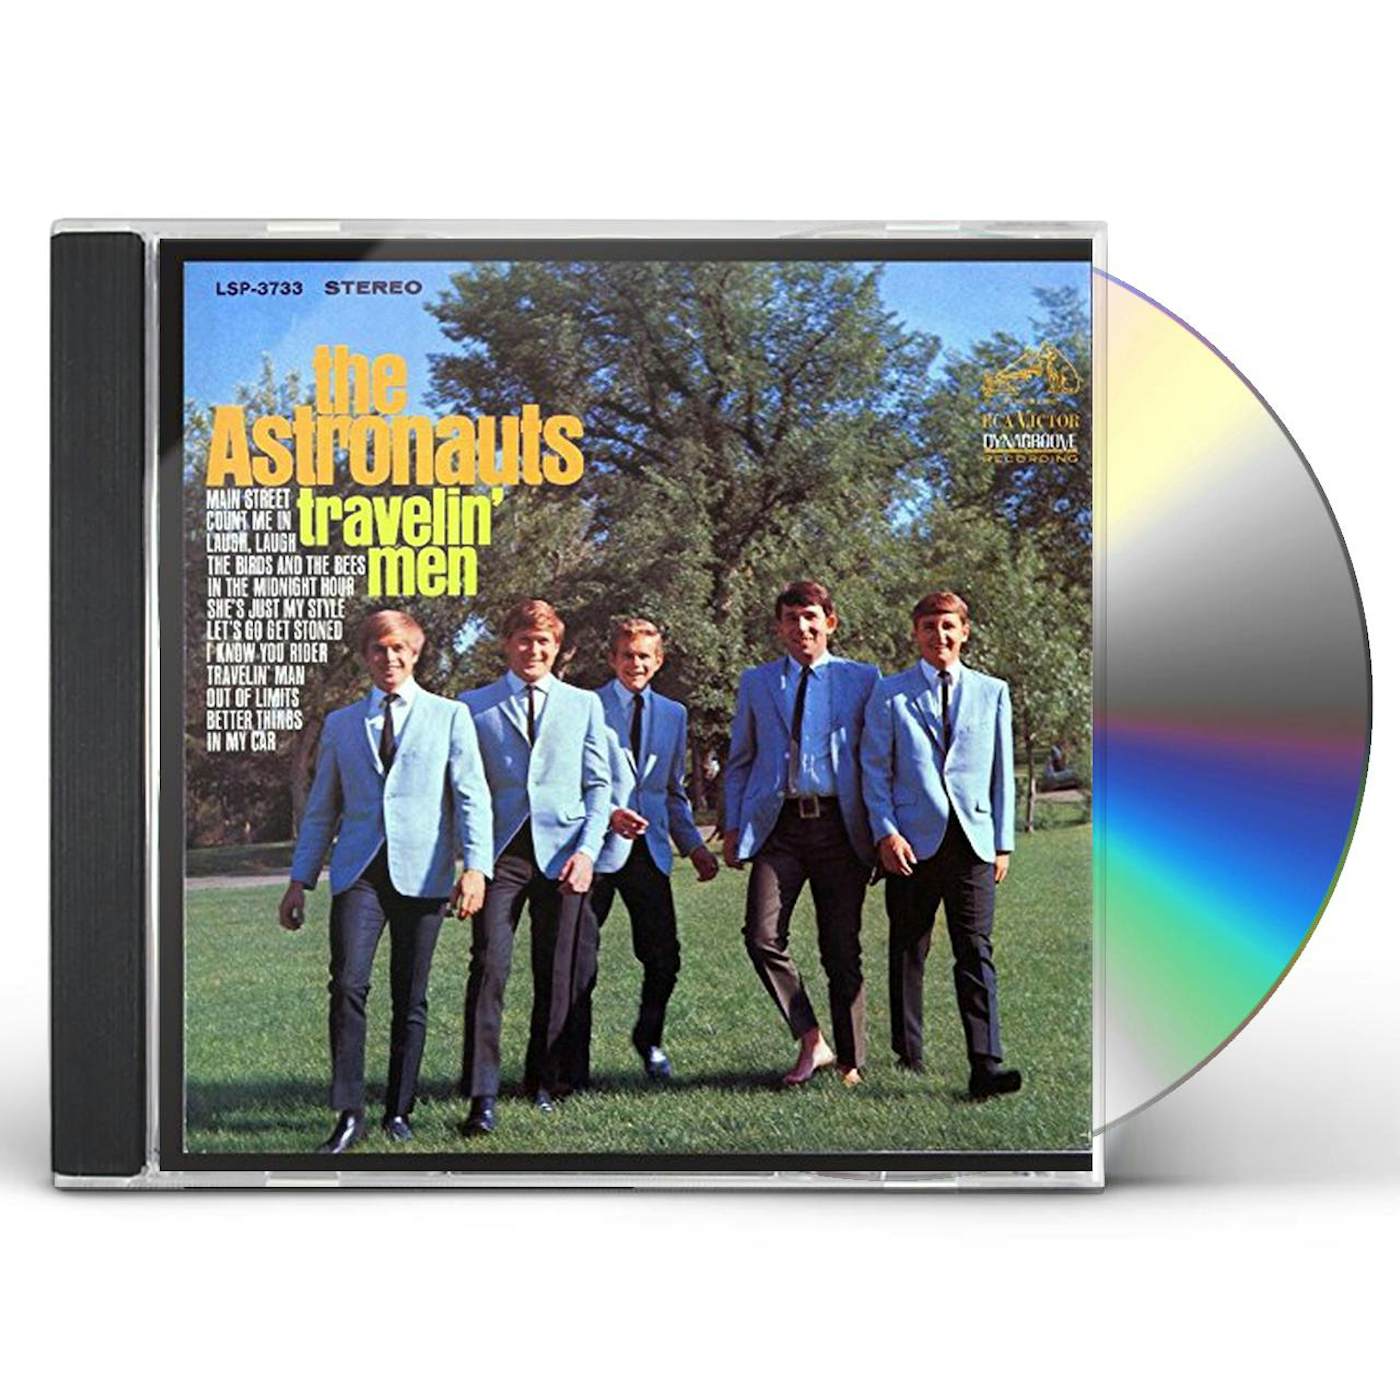 The Astronauts TRAVELIN' MEN CD